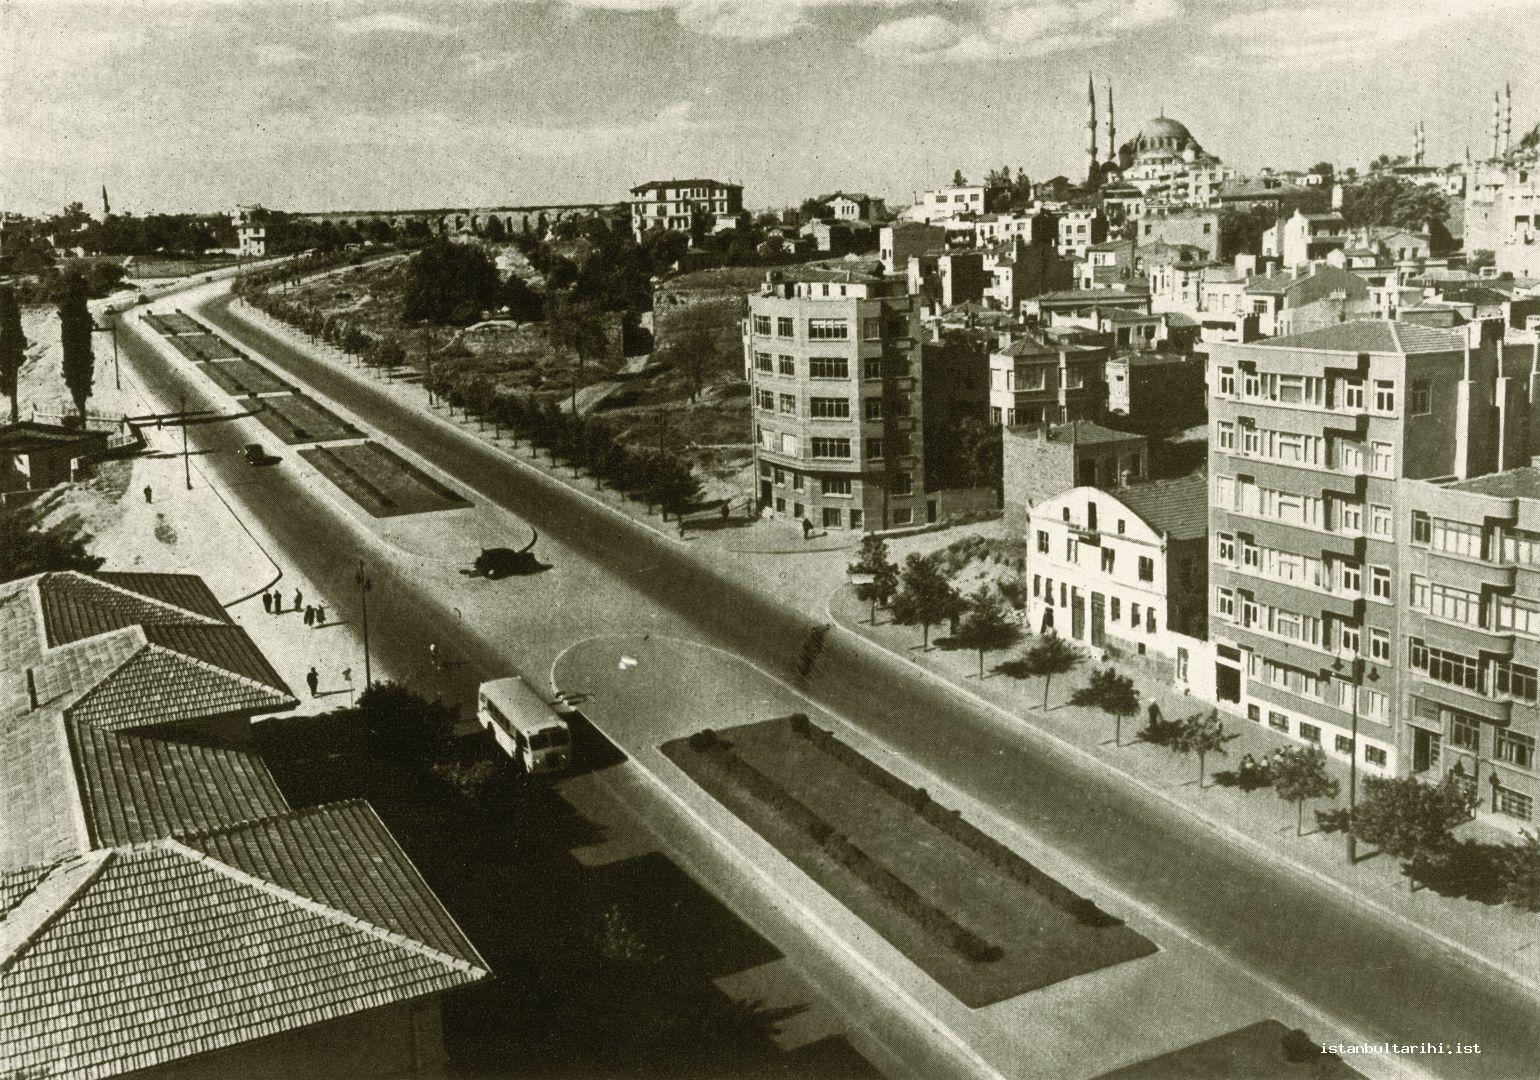 4- The view of Aksaray region from Atatürk Boulevard (<em>Cumhuriyet Devrinde İstanbul</em>)